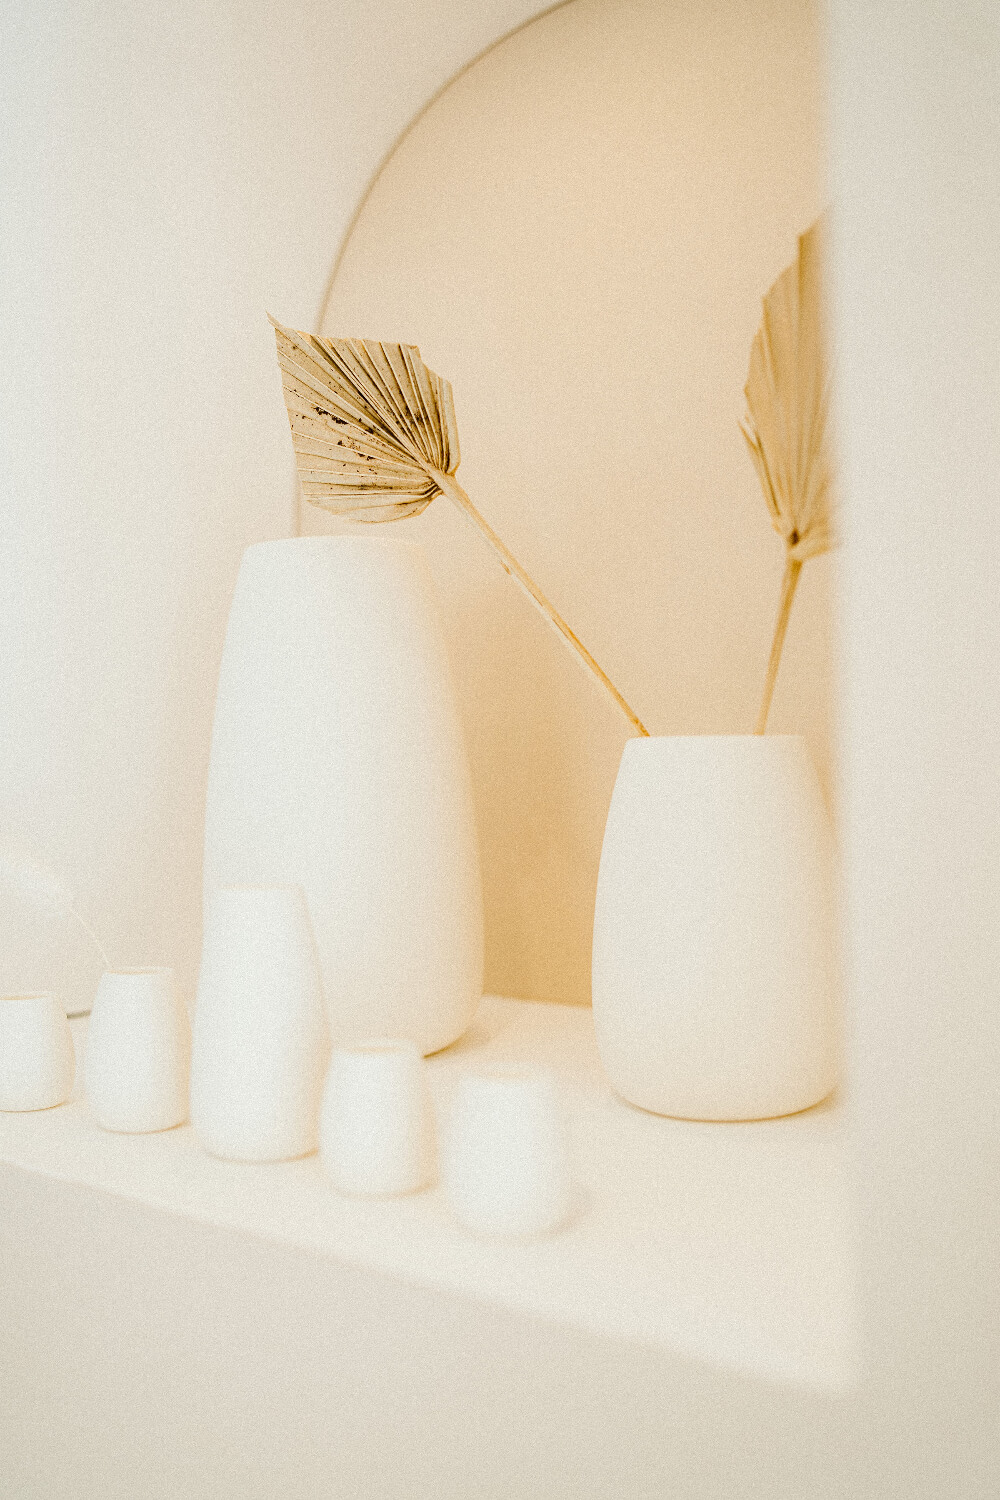 Minimal vases with dried flowers inside Rebecca Furze Jewellery, Totnes